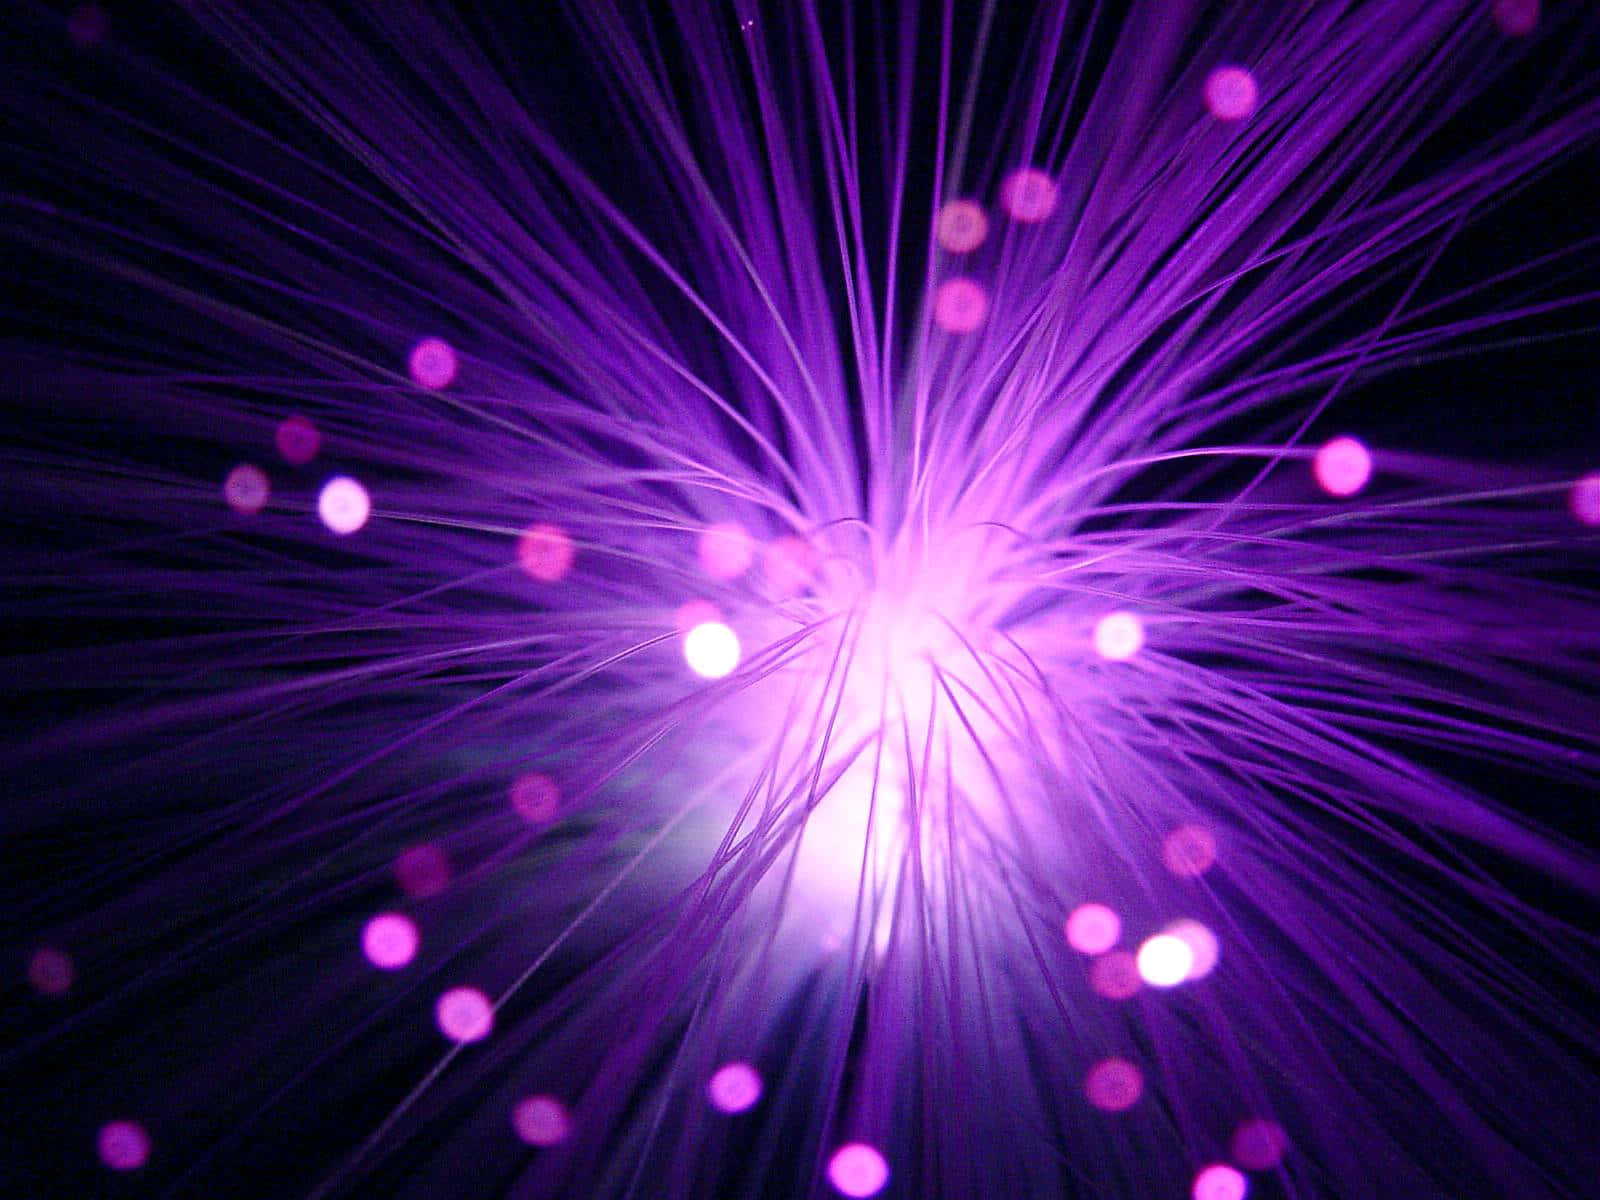 Caption: Electric Purple Splash Background